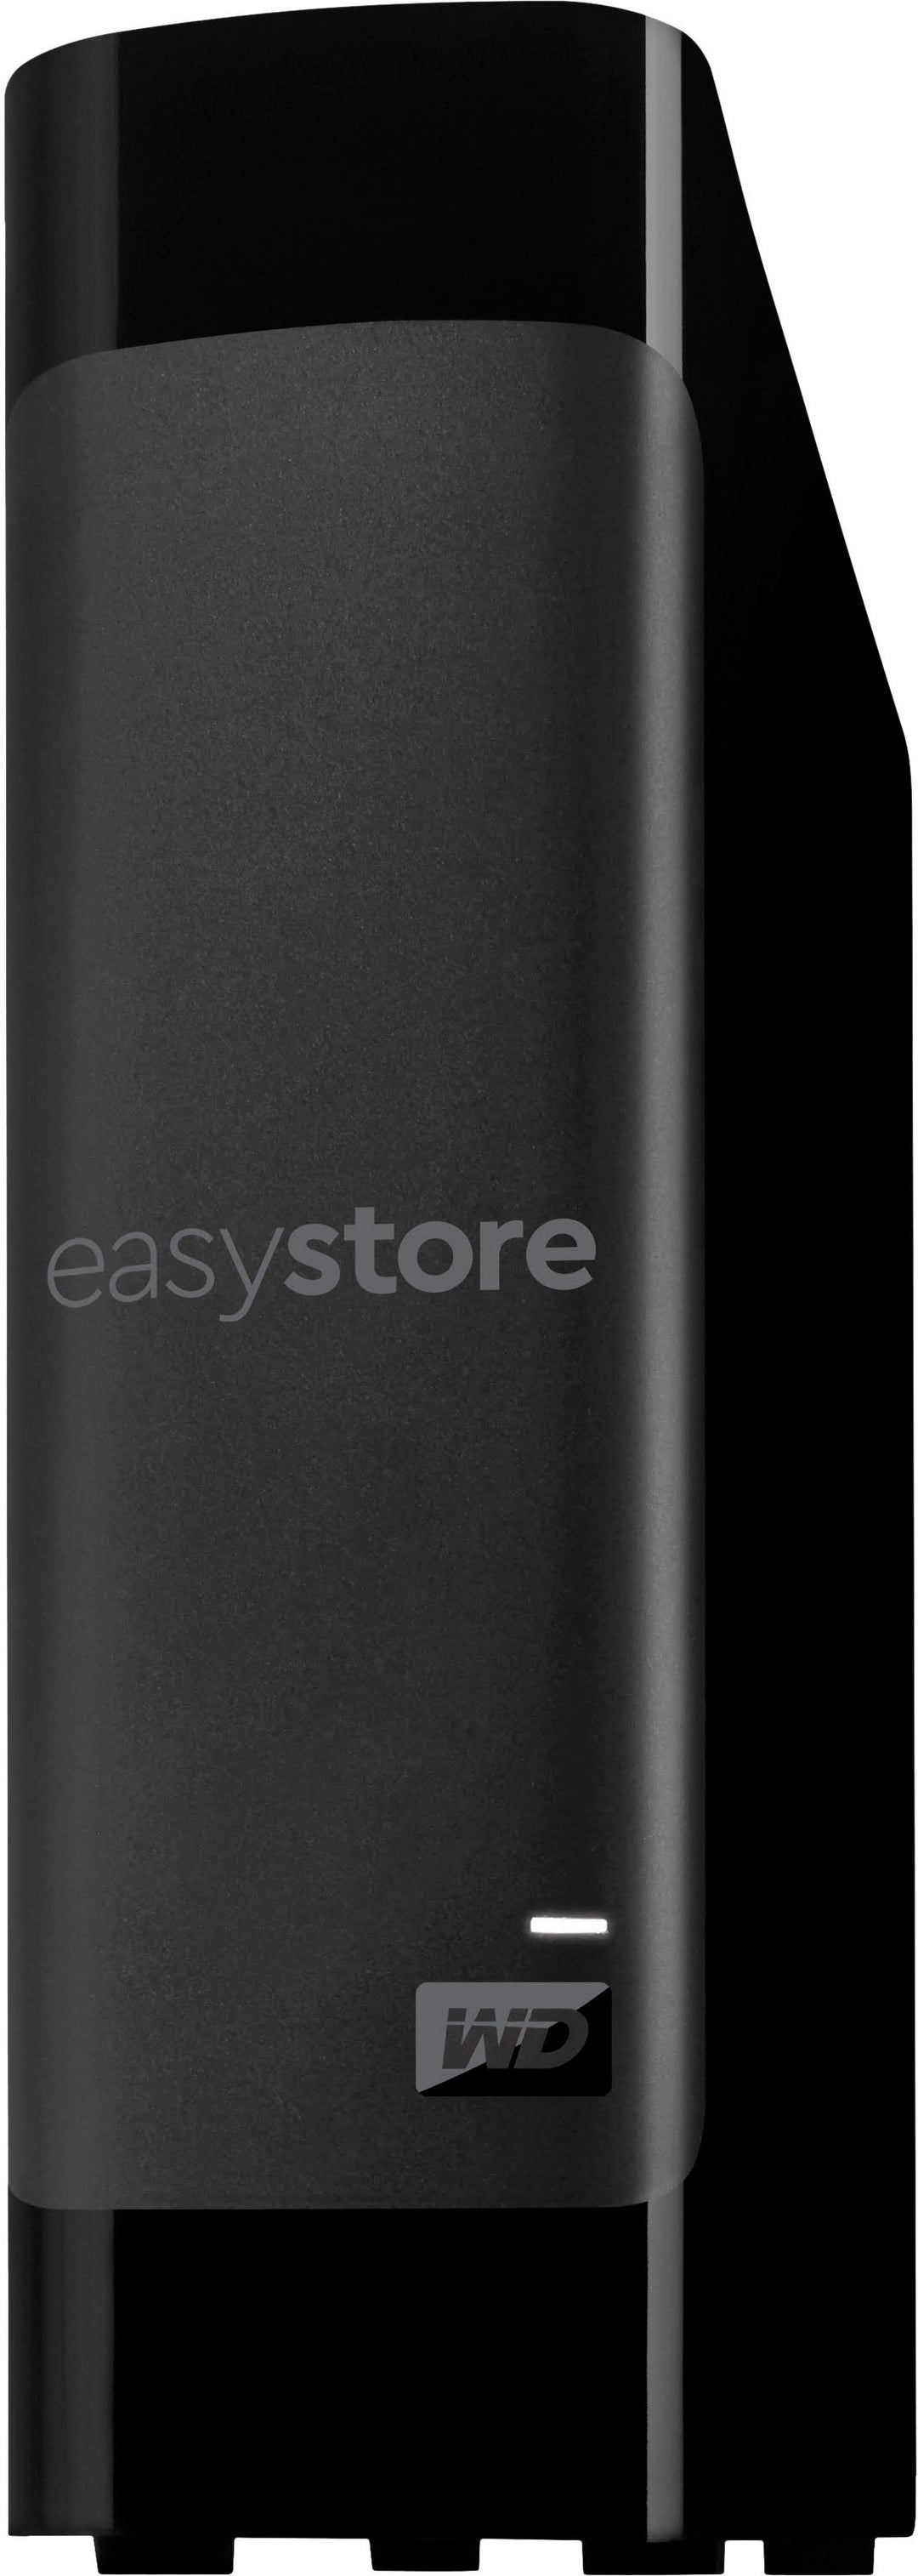 WD - easystore 22TB External USB 3.0 Hard Drive - Black_4